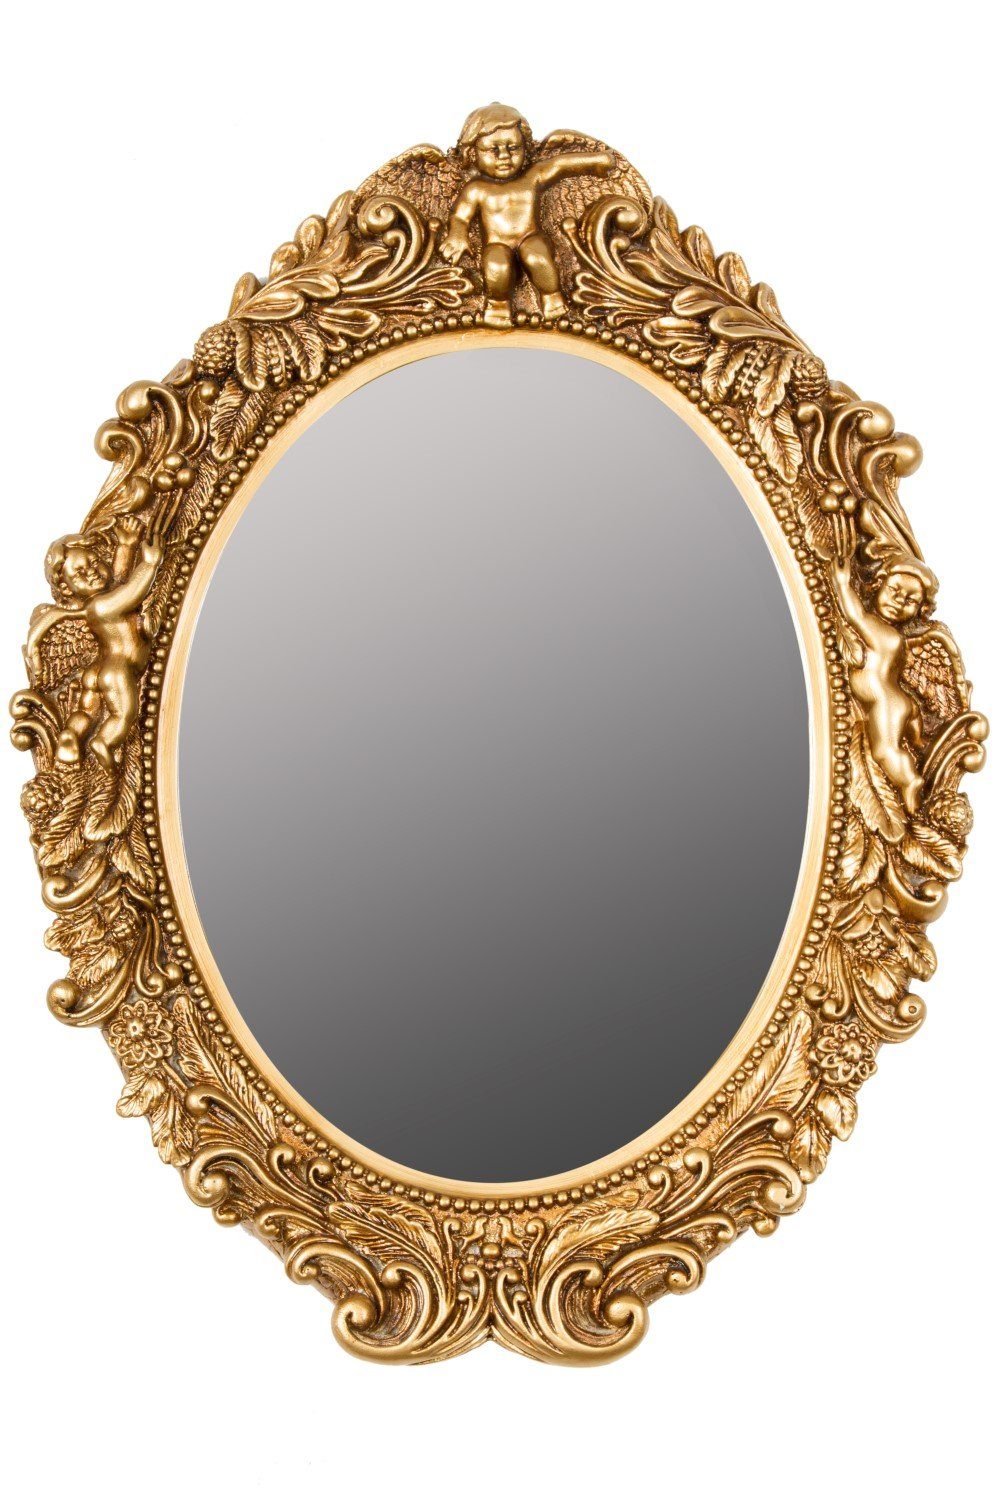 elbmöbel Wandspiegel Spiegel Oval Barock gold Wandspiegel, Wandspiegel: Oval 50x43x5 cm gold barock shabby chic pompös Gold | Gold